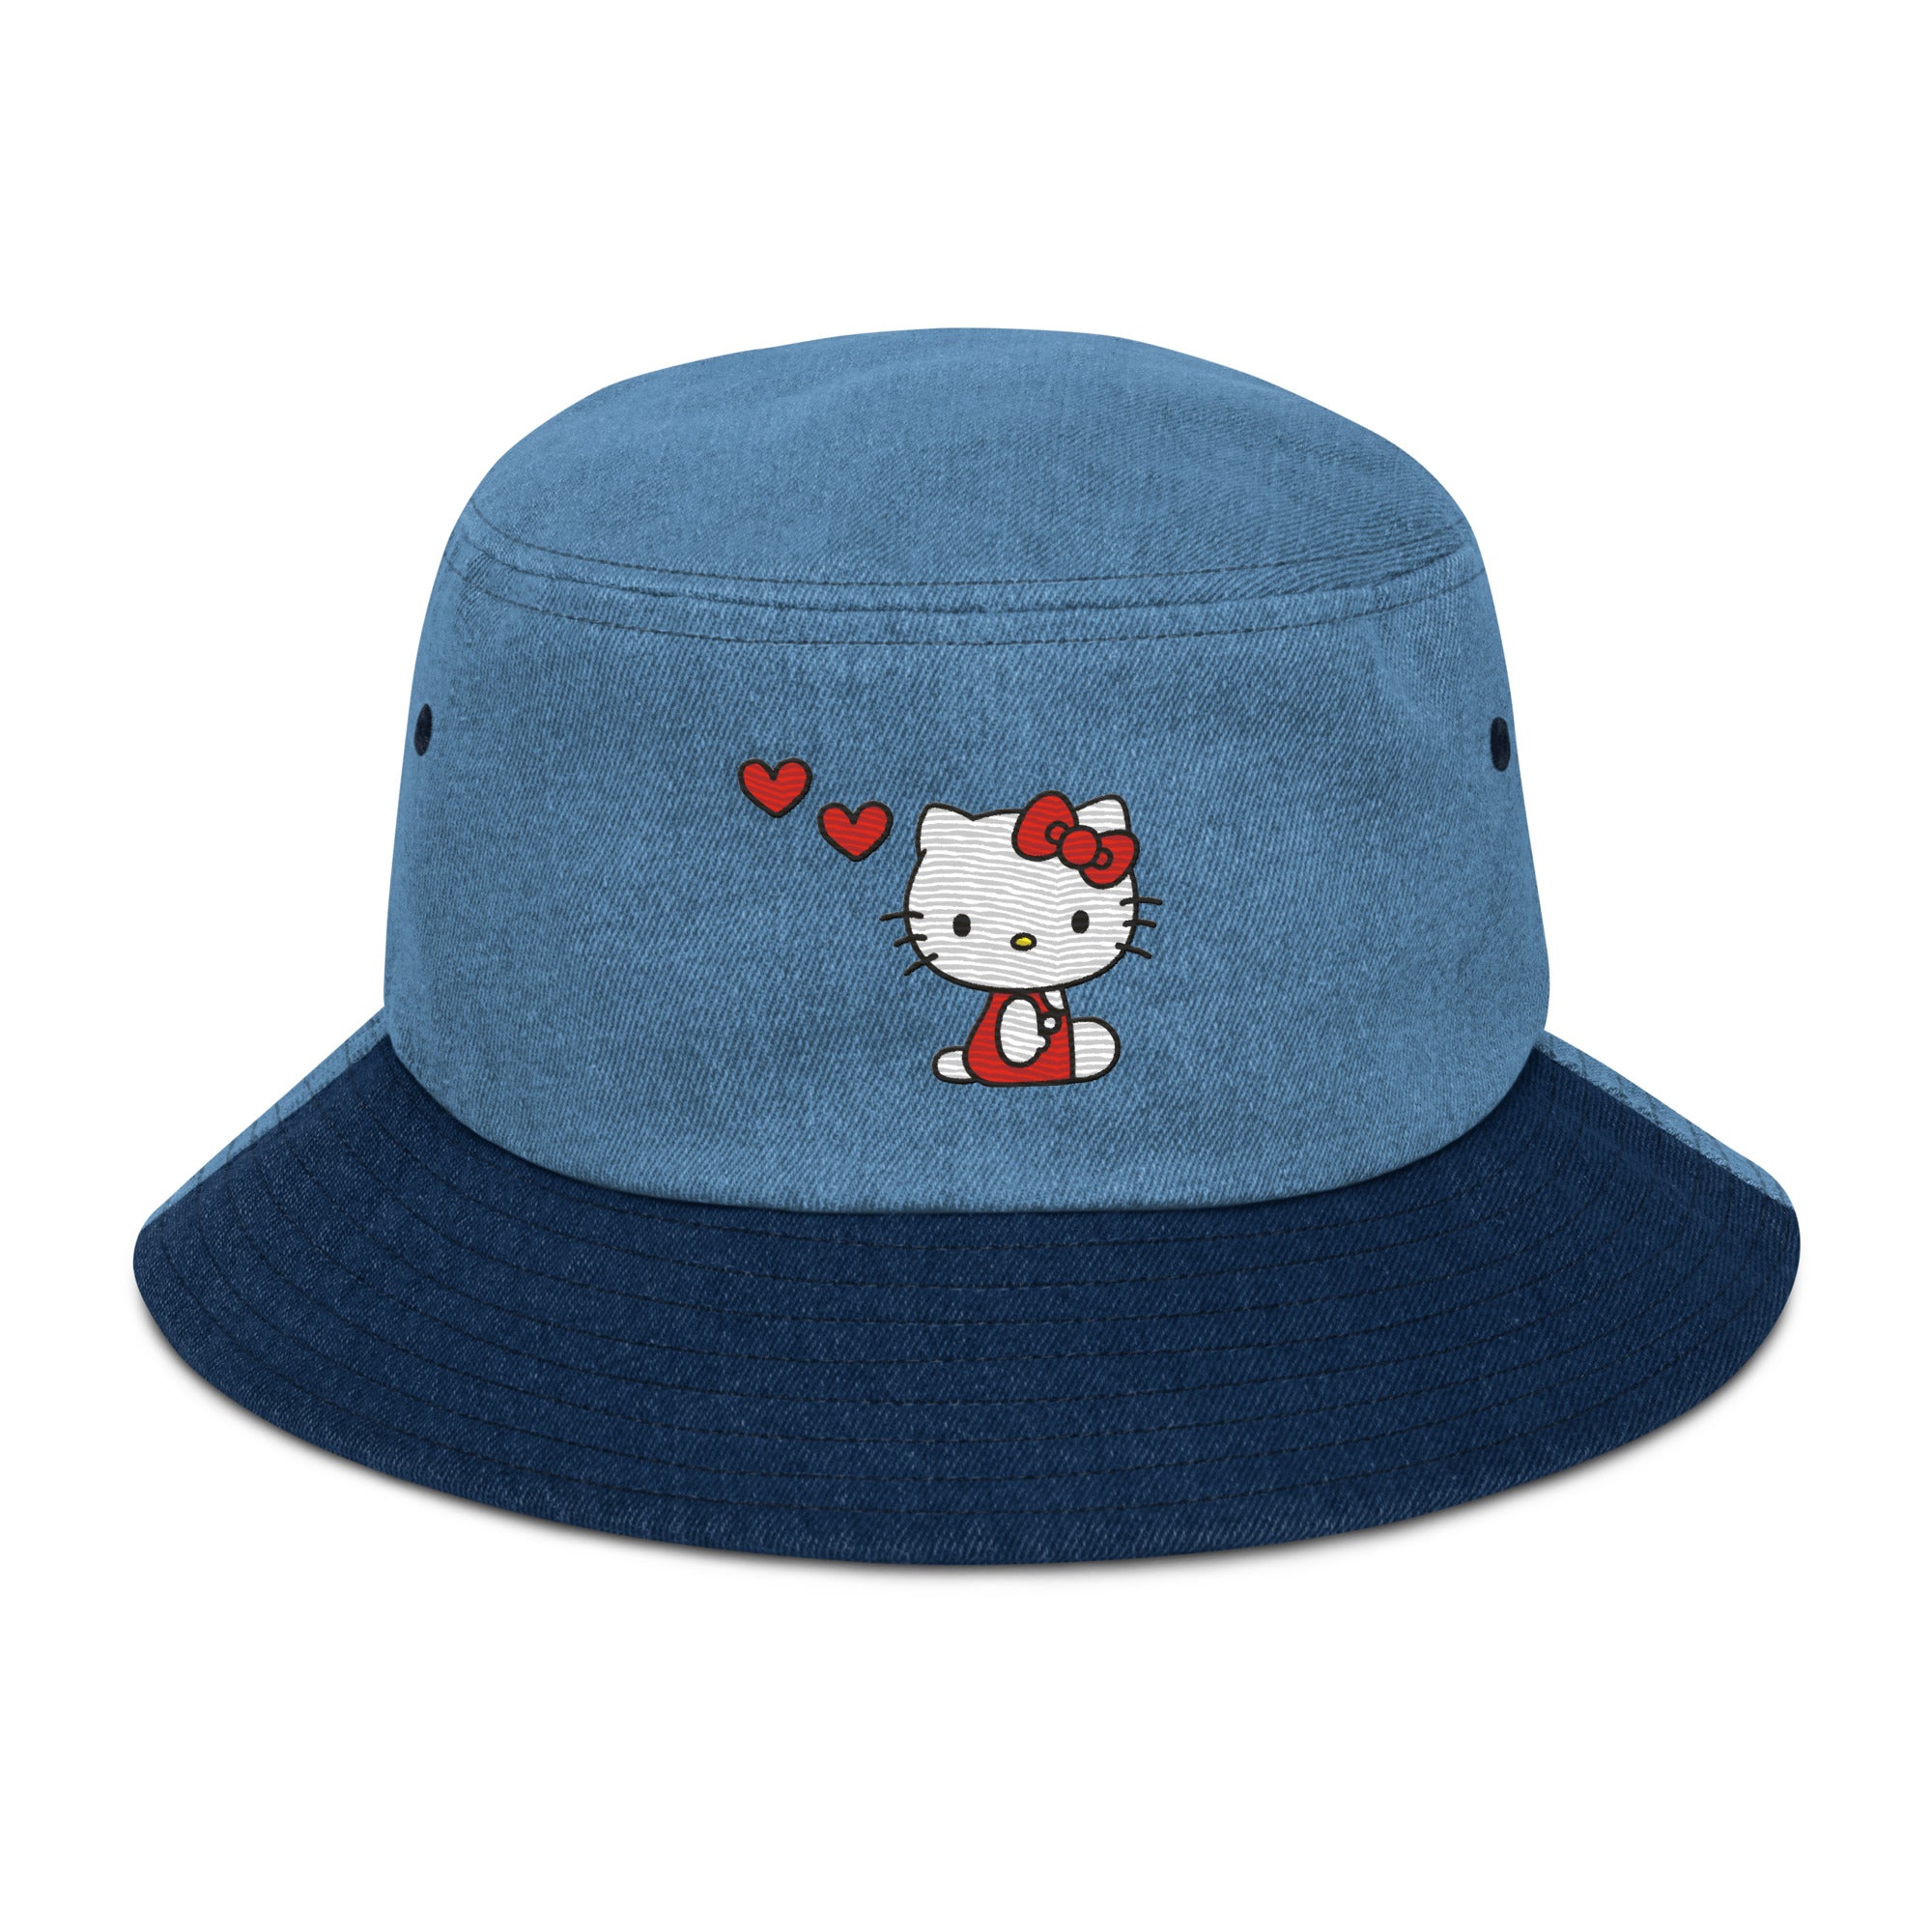 Hello Kitty Embroidered Denim Bucket Hat Apparel Printful Classic / Light Denim  